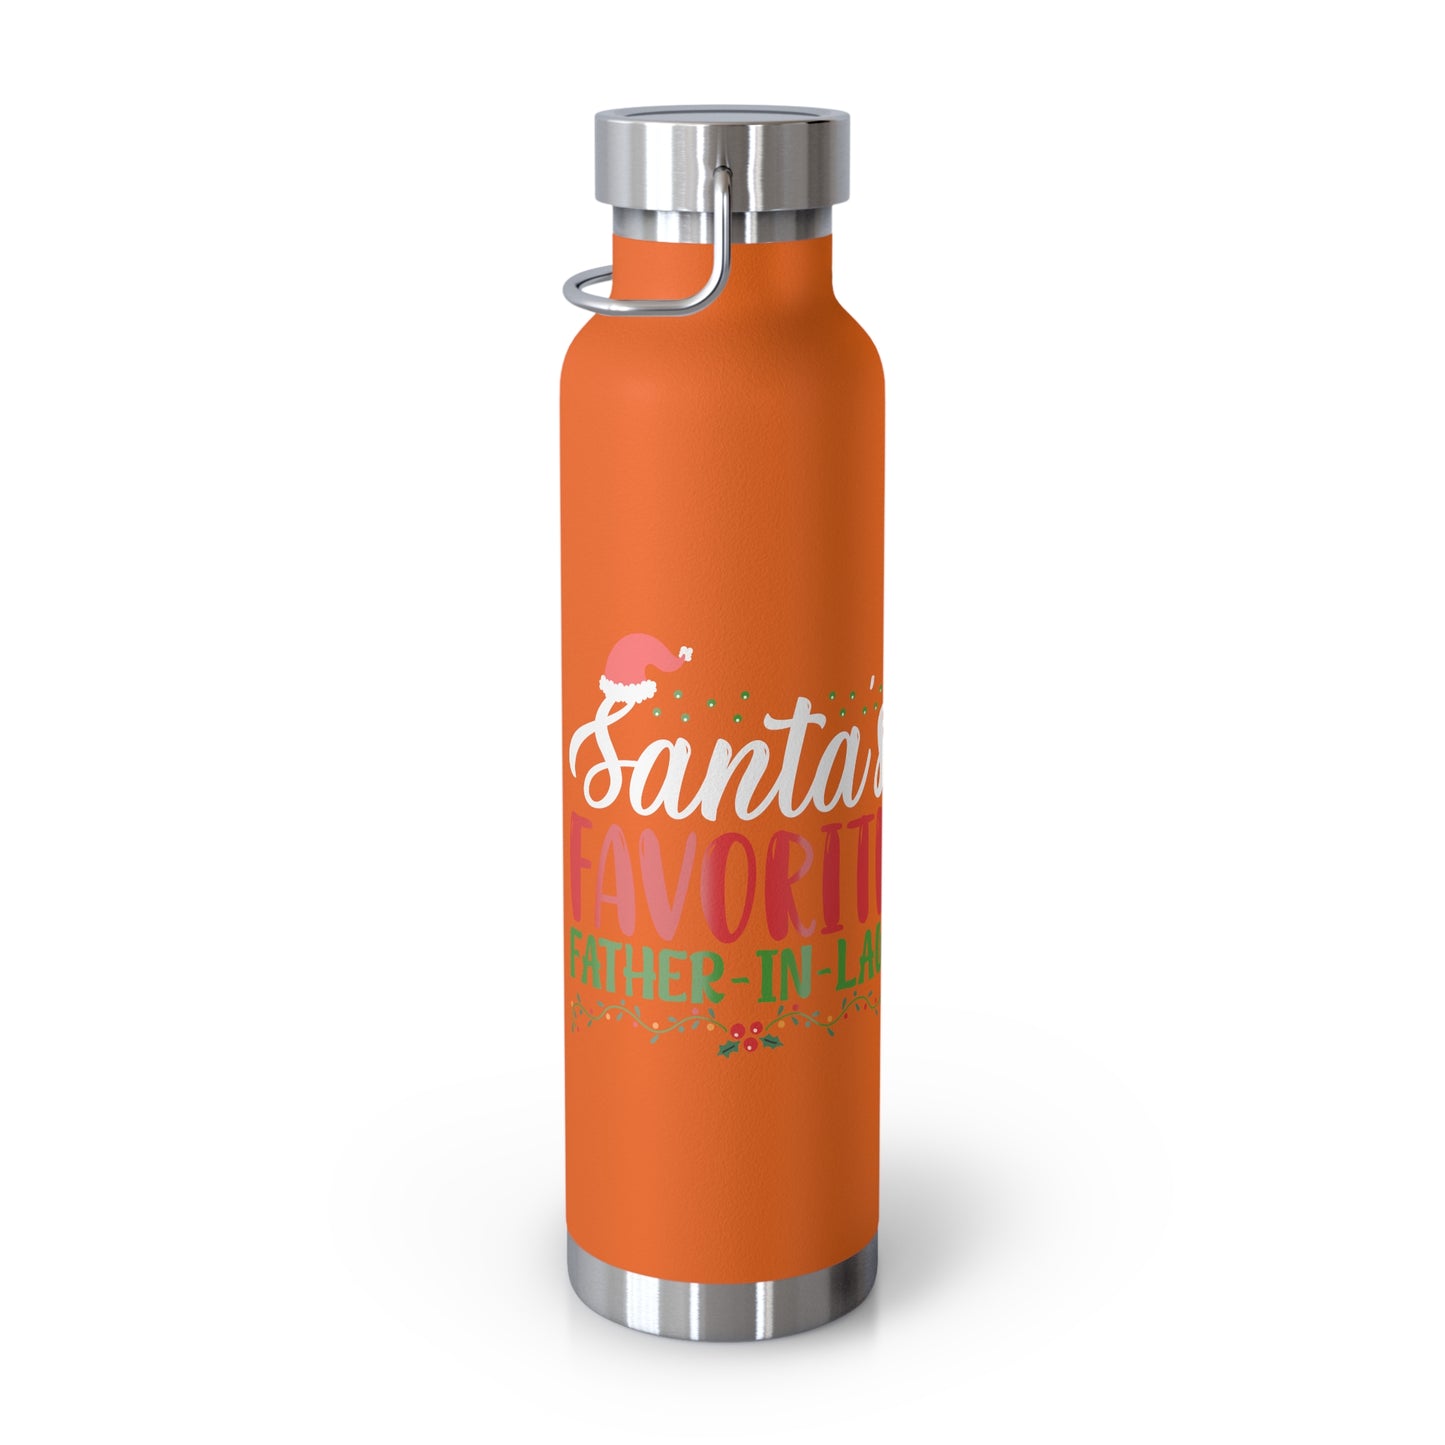 Santa's Favorite Father-In-Law Copper Vacuum Insulated Bottle, 22oz